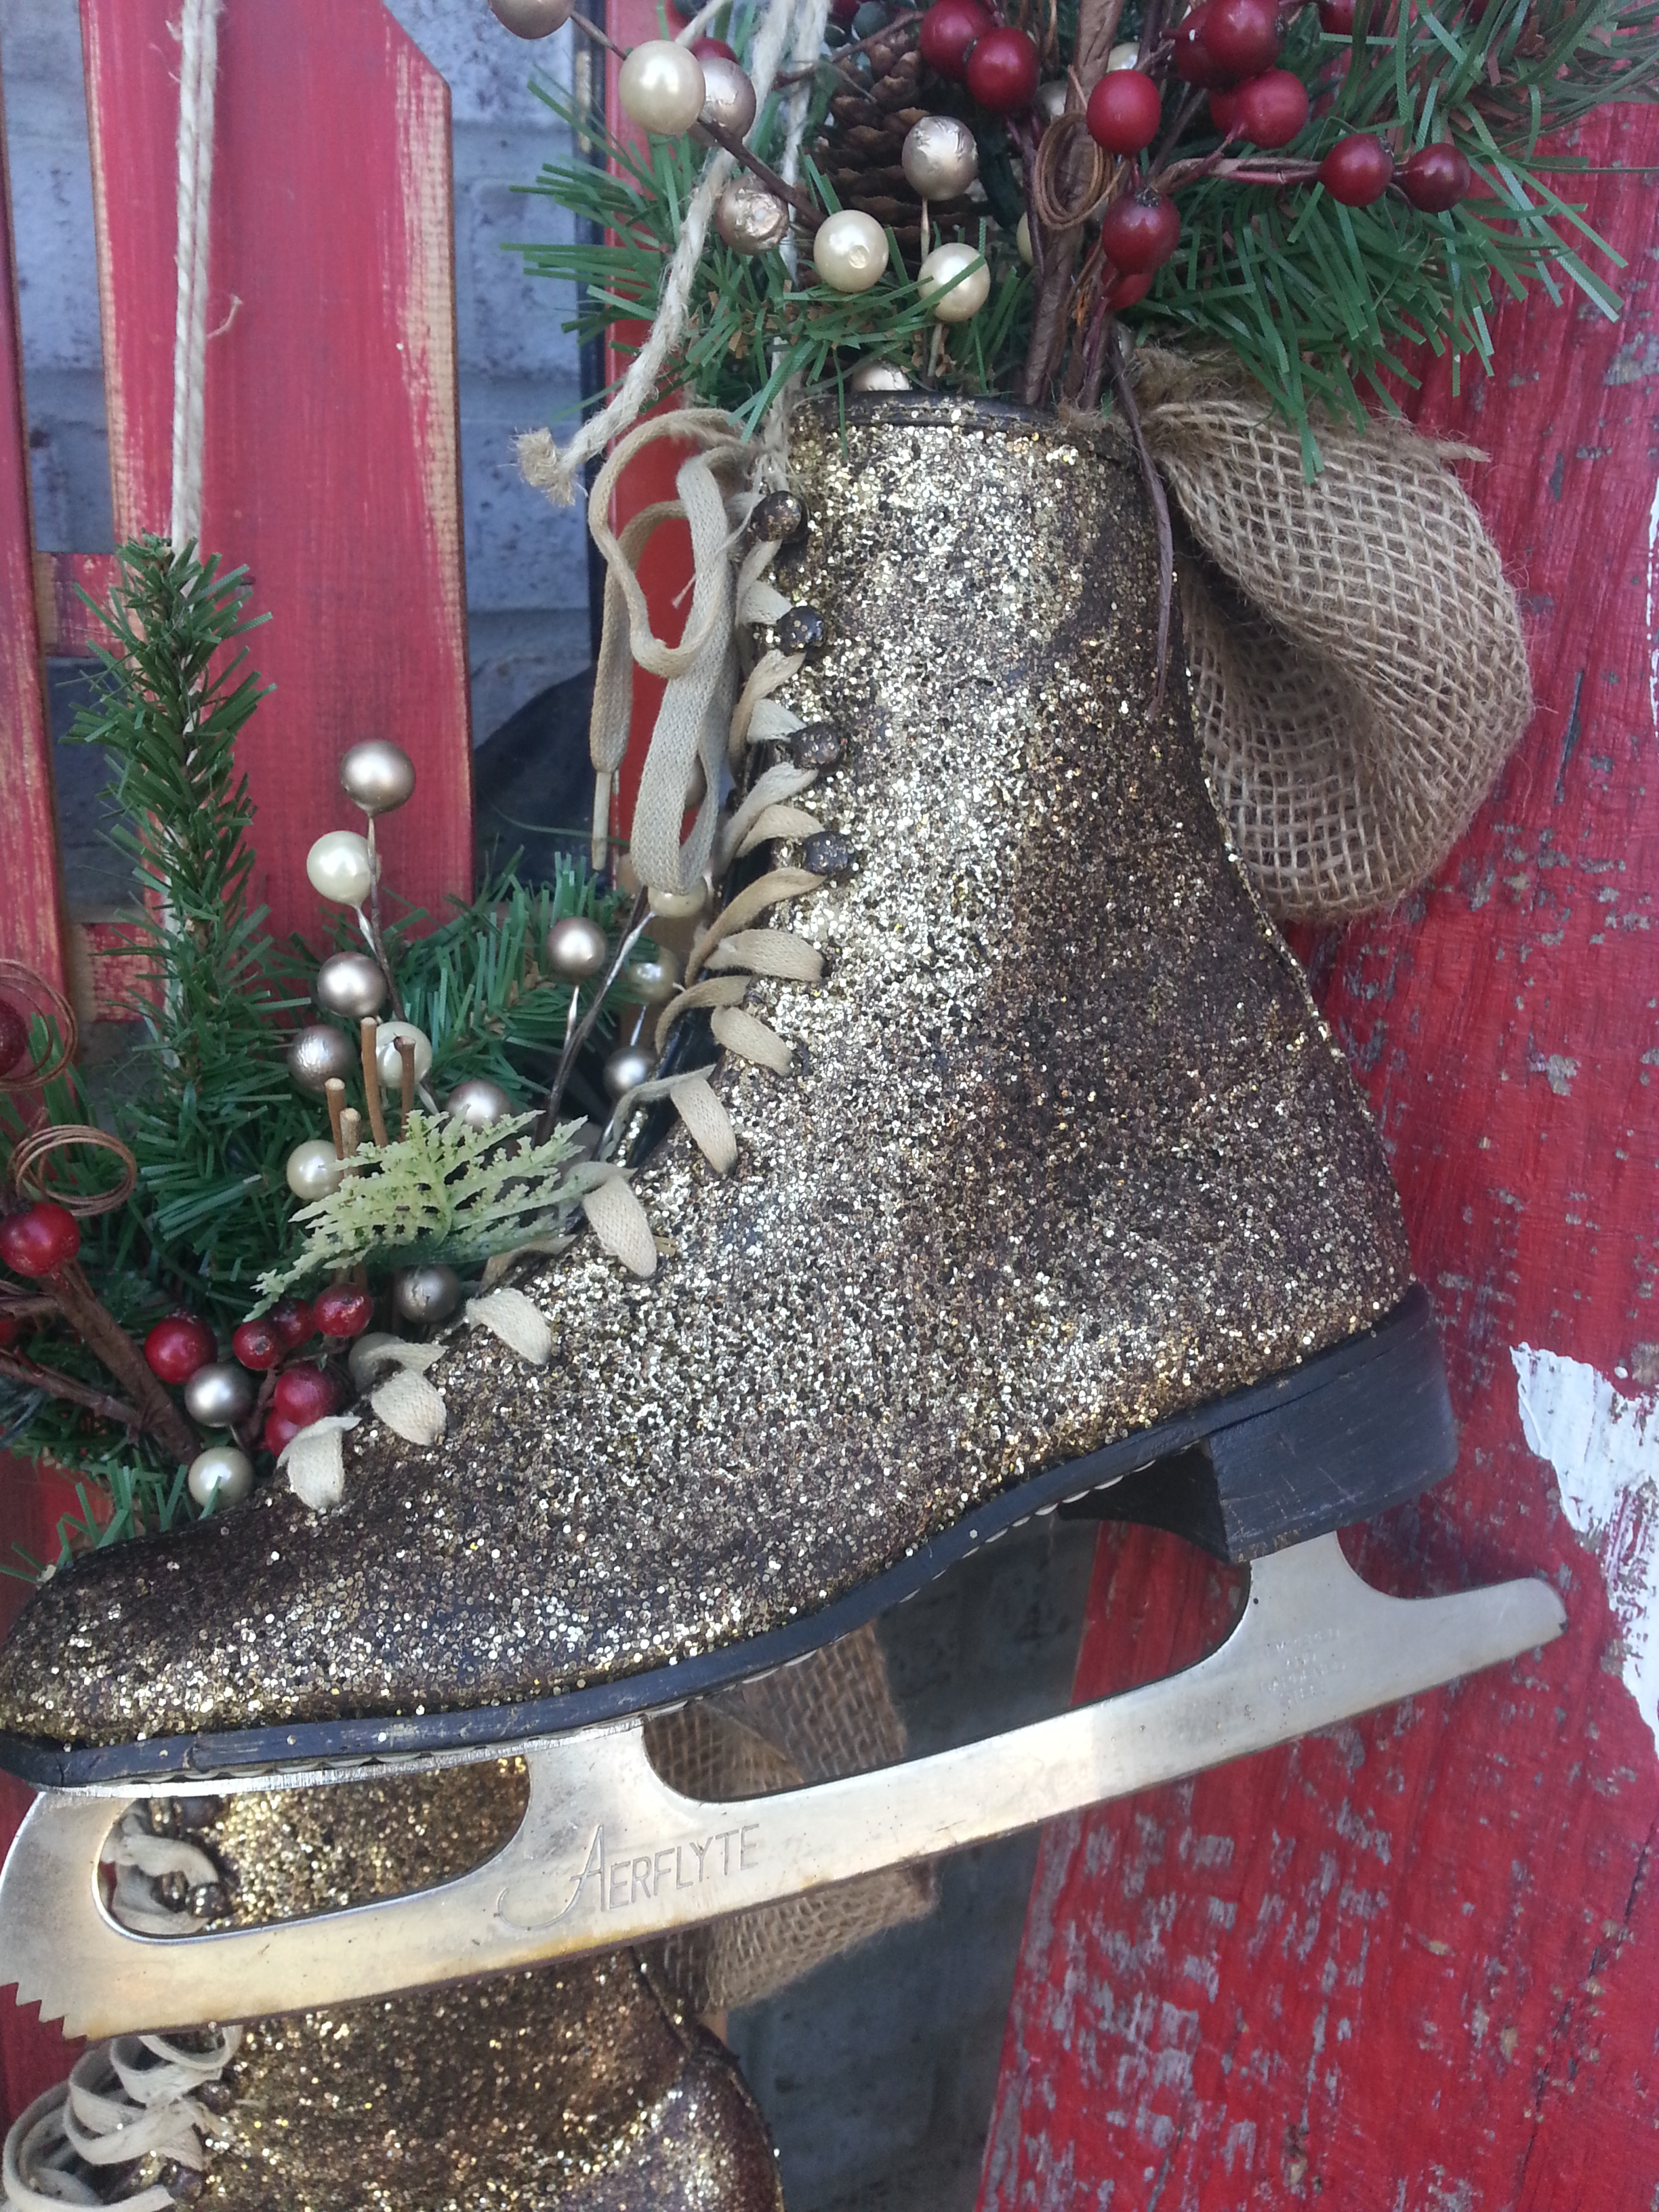 Glittered ice skates are taking over Christmas decor!